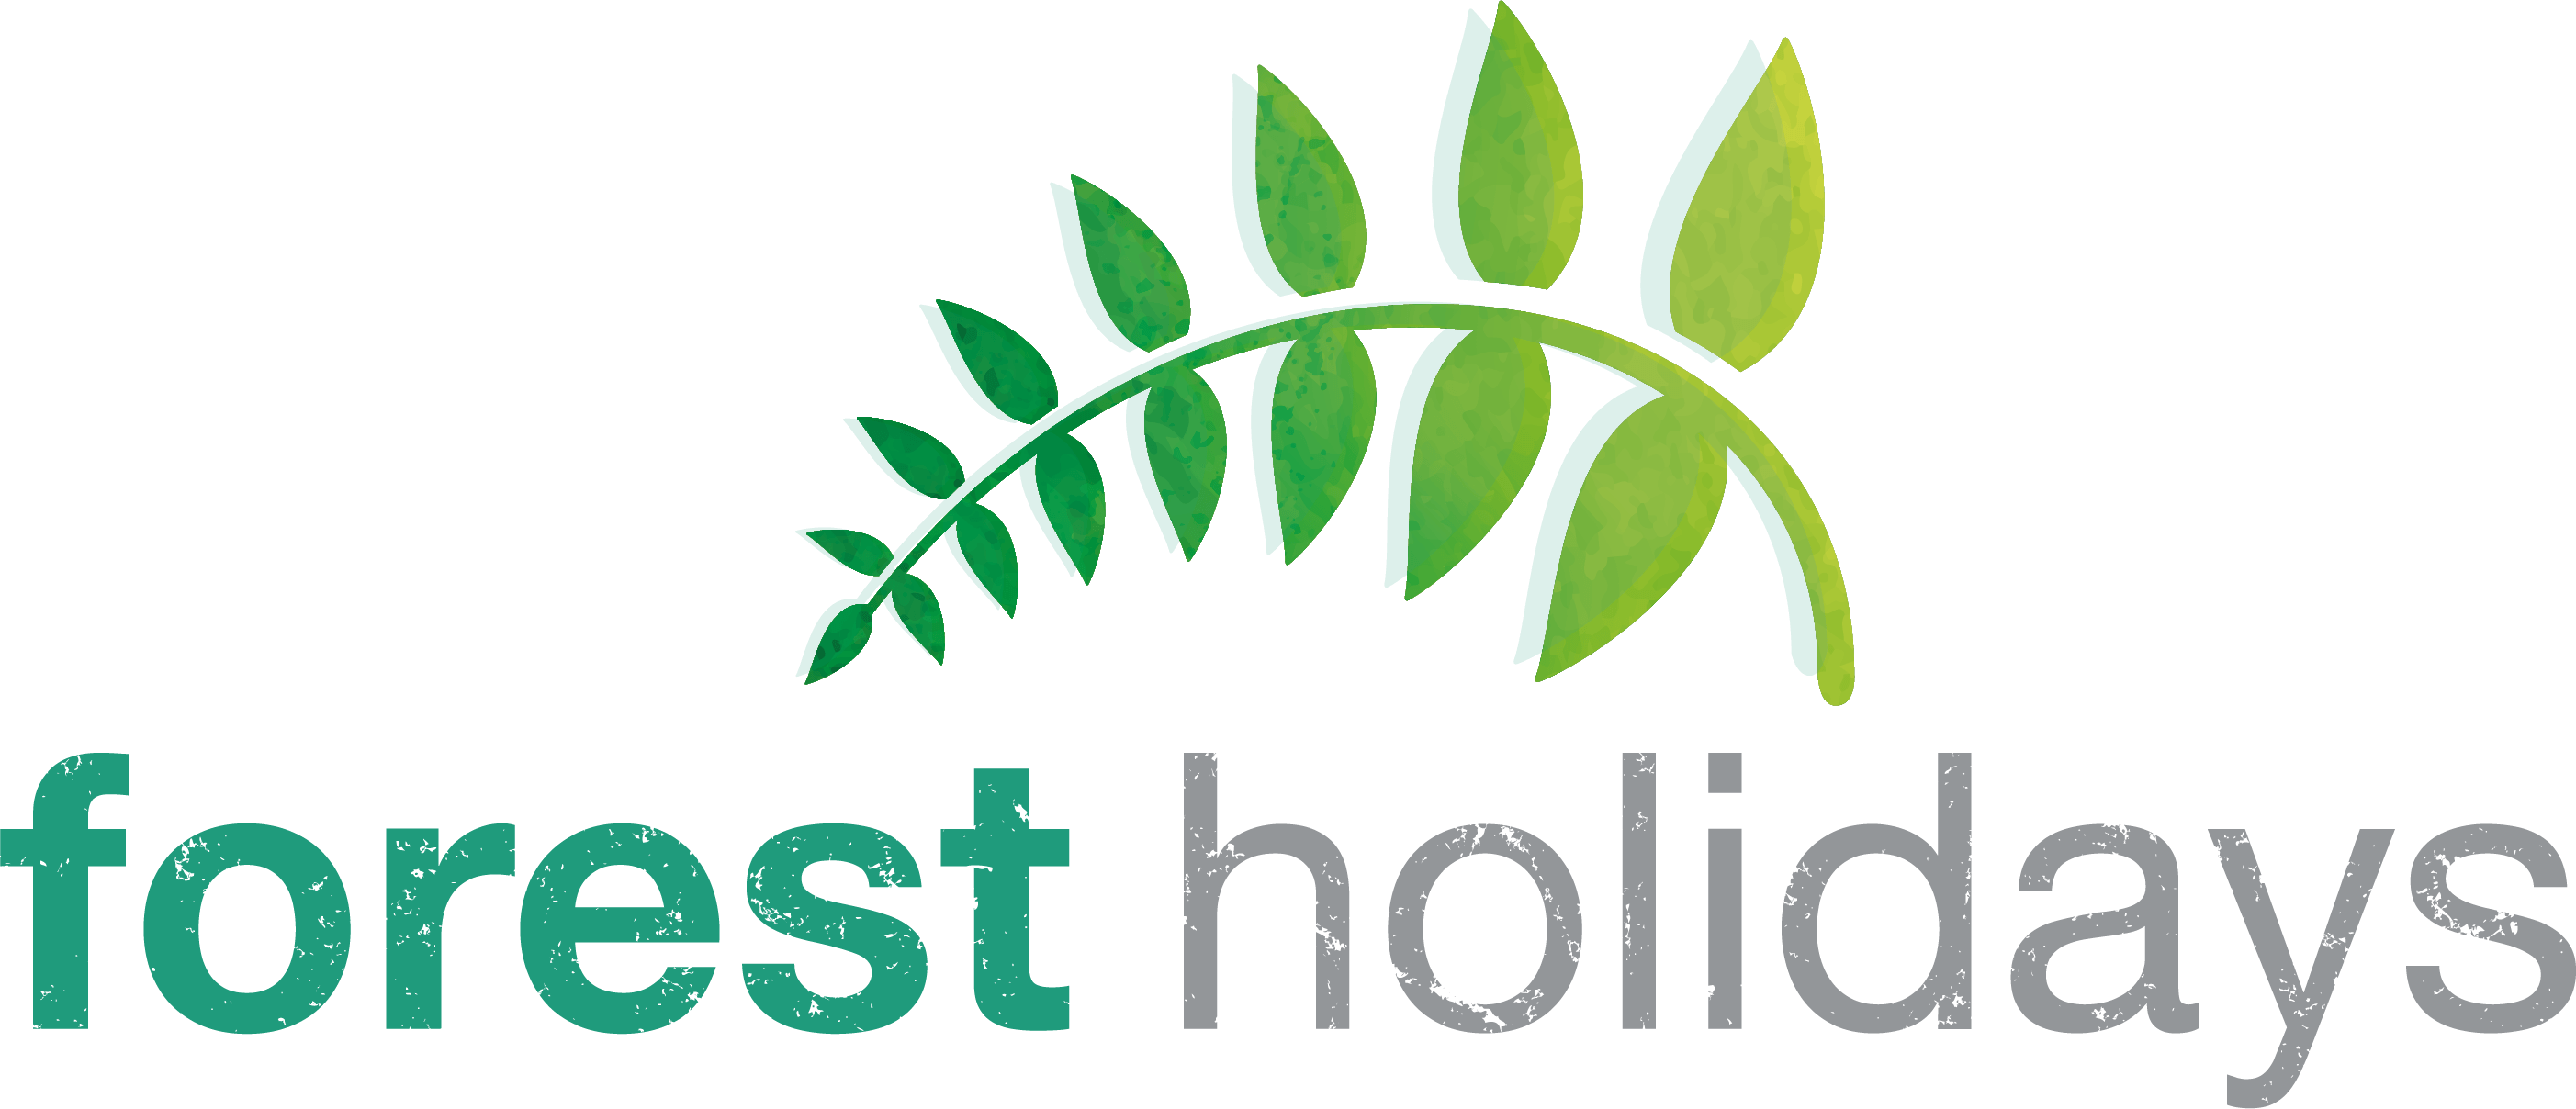 Holiday Logo - Short Breaks & Holidays in England & the UK, 2019/20